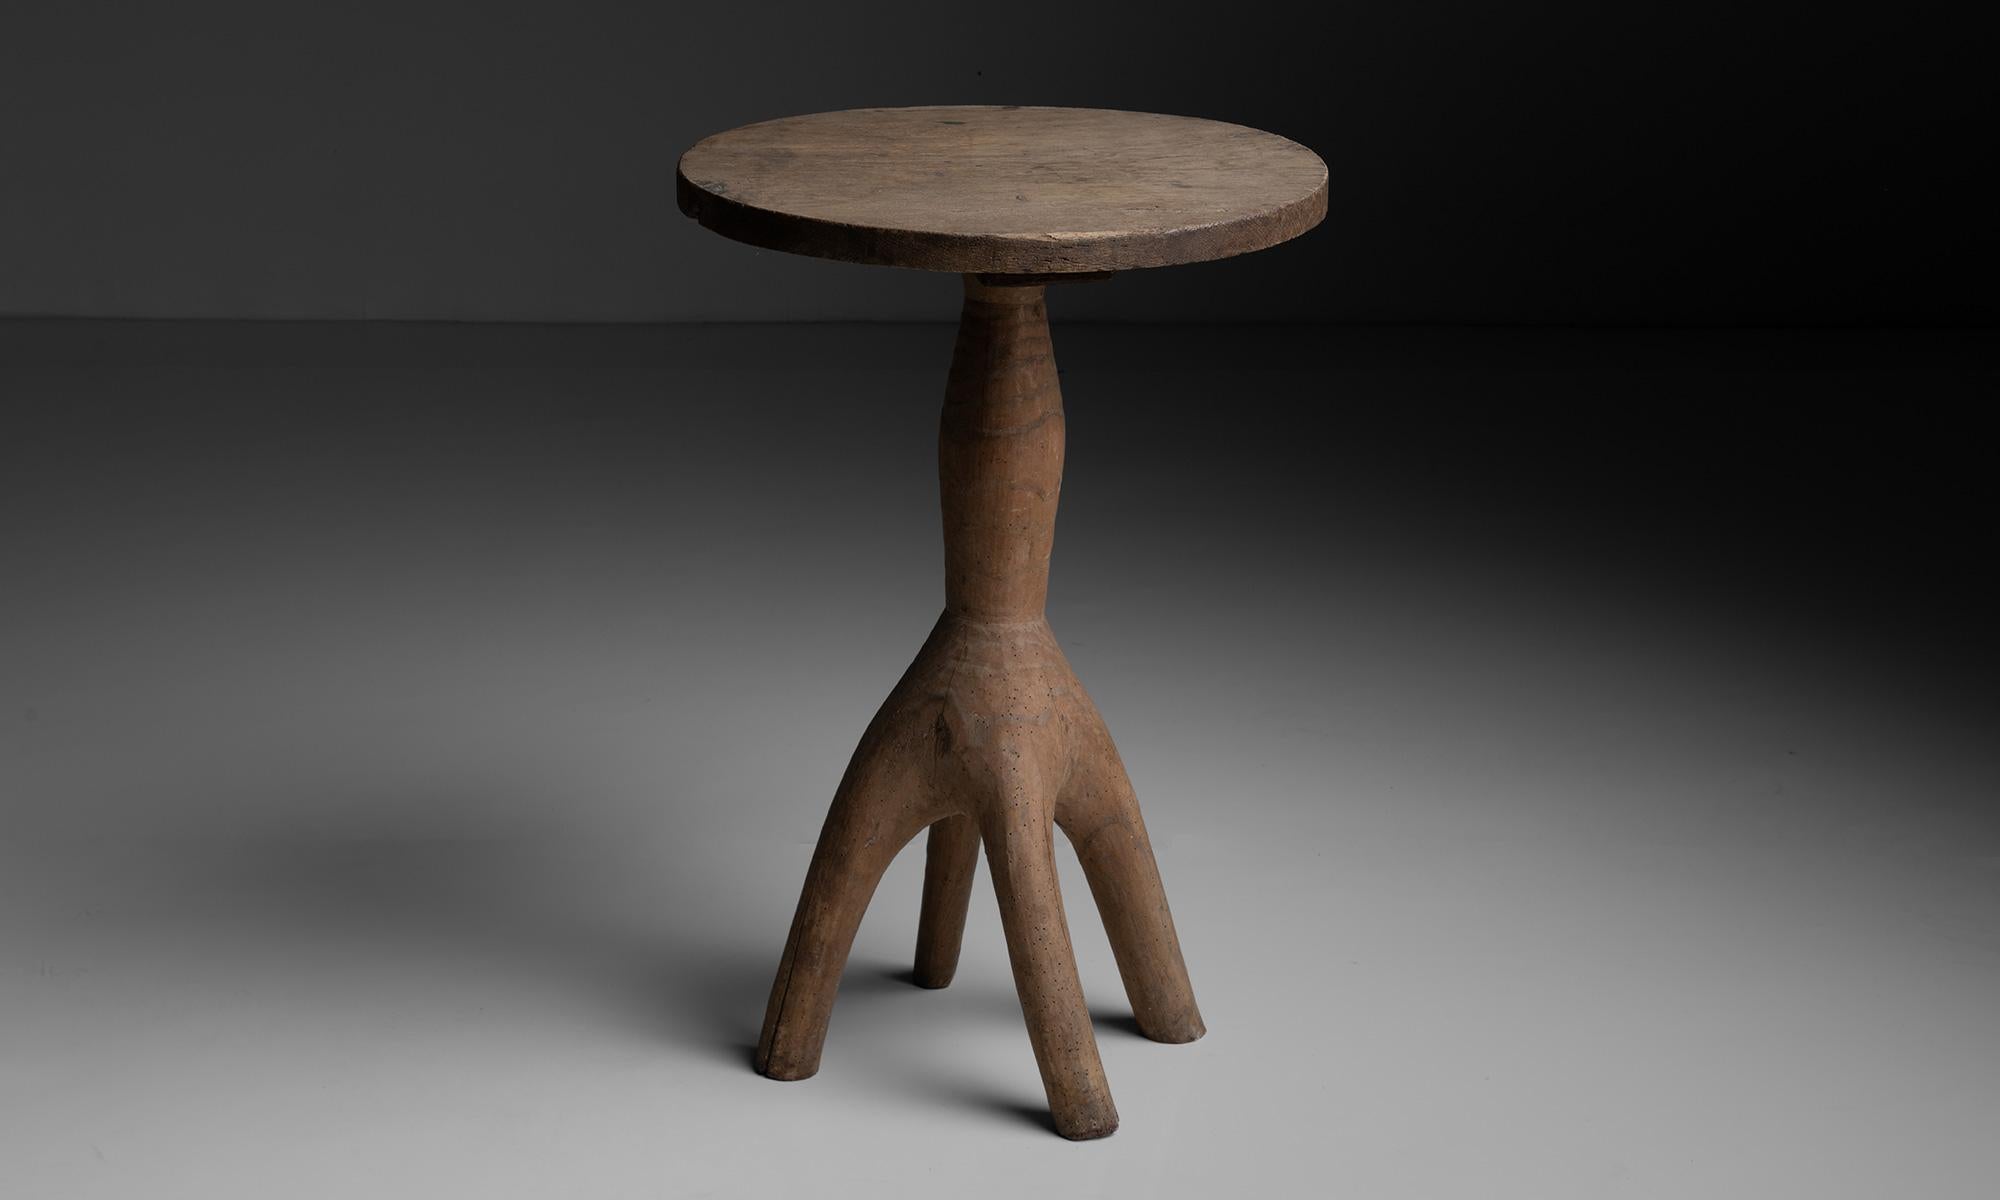 Primitive Sculptural Side Table, France, circa 1900